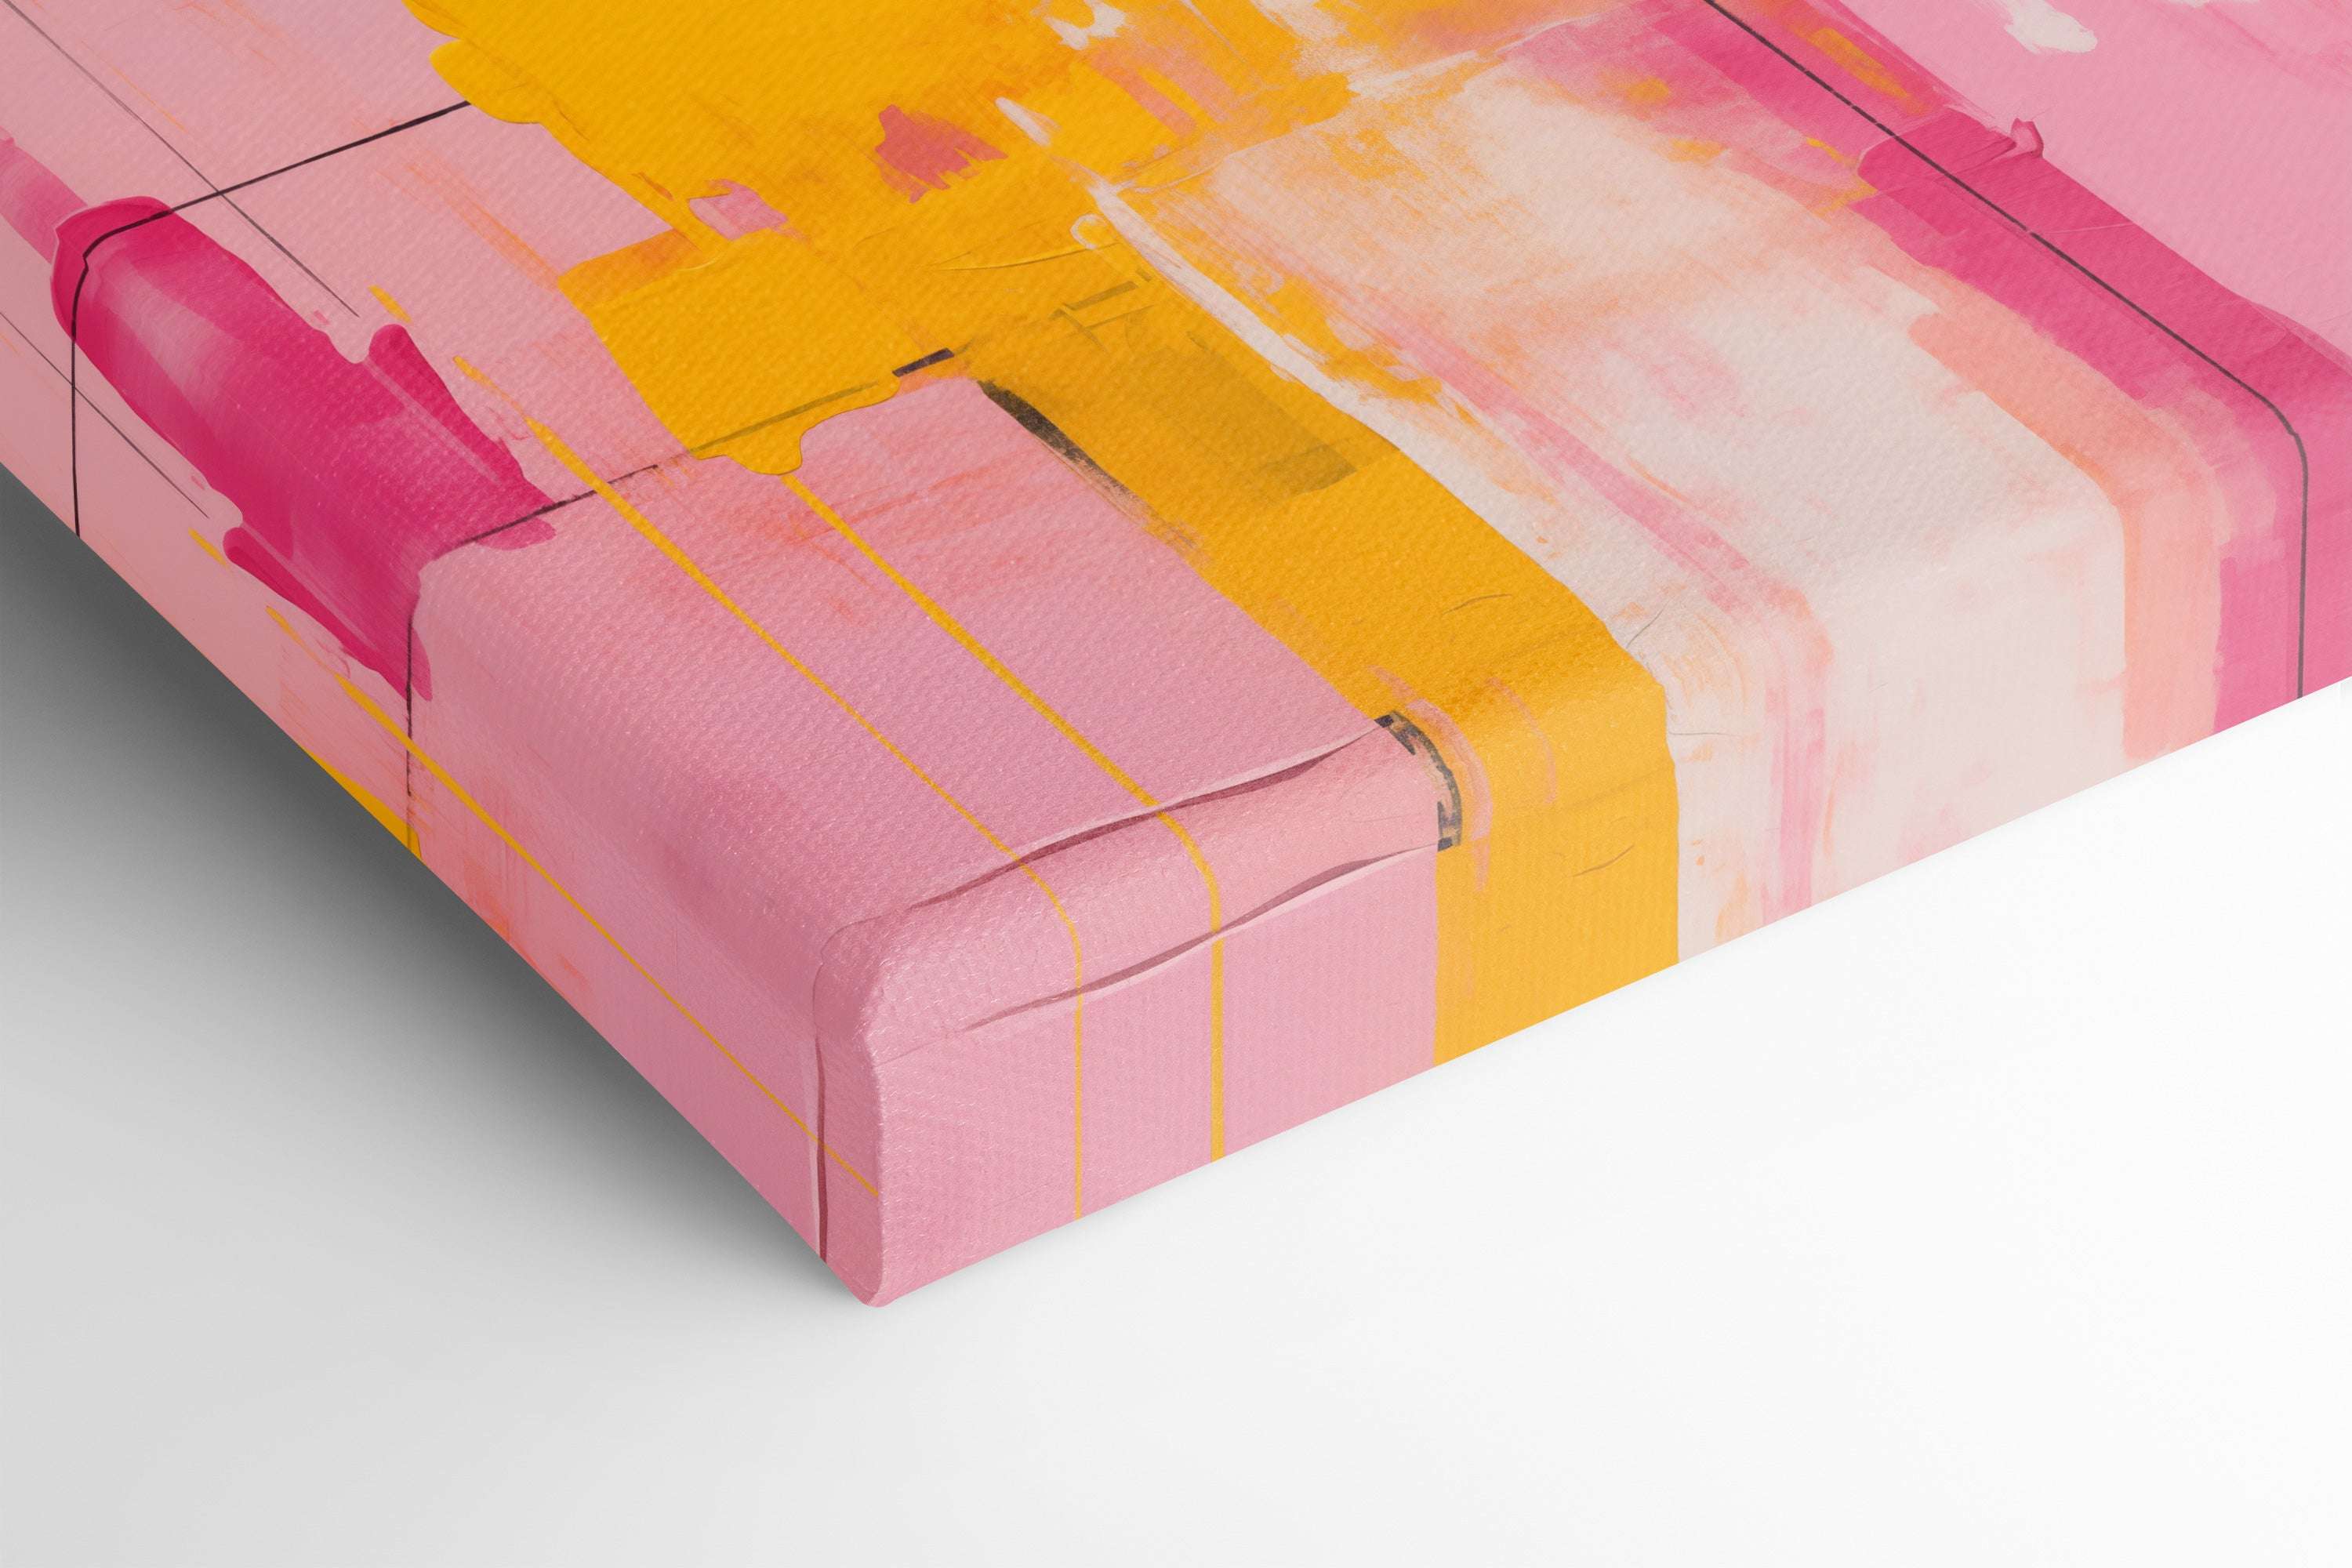 Candy Land Color Blocks - Canvas Print - Artoholica Ready to Hang Canvas Print